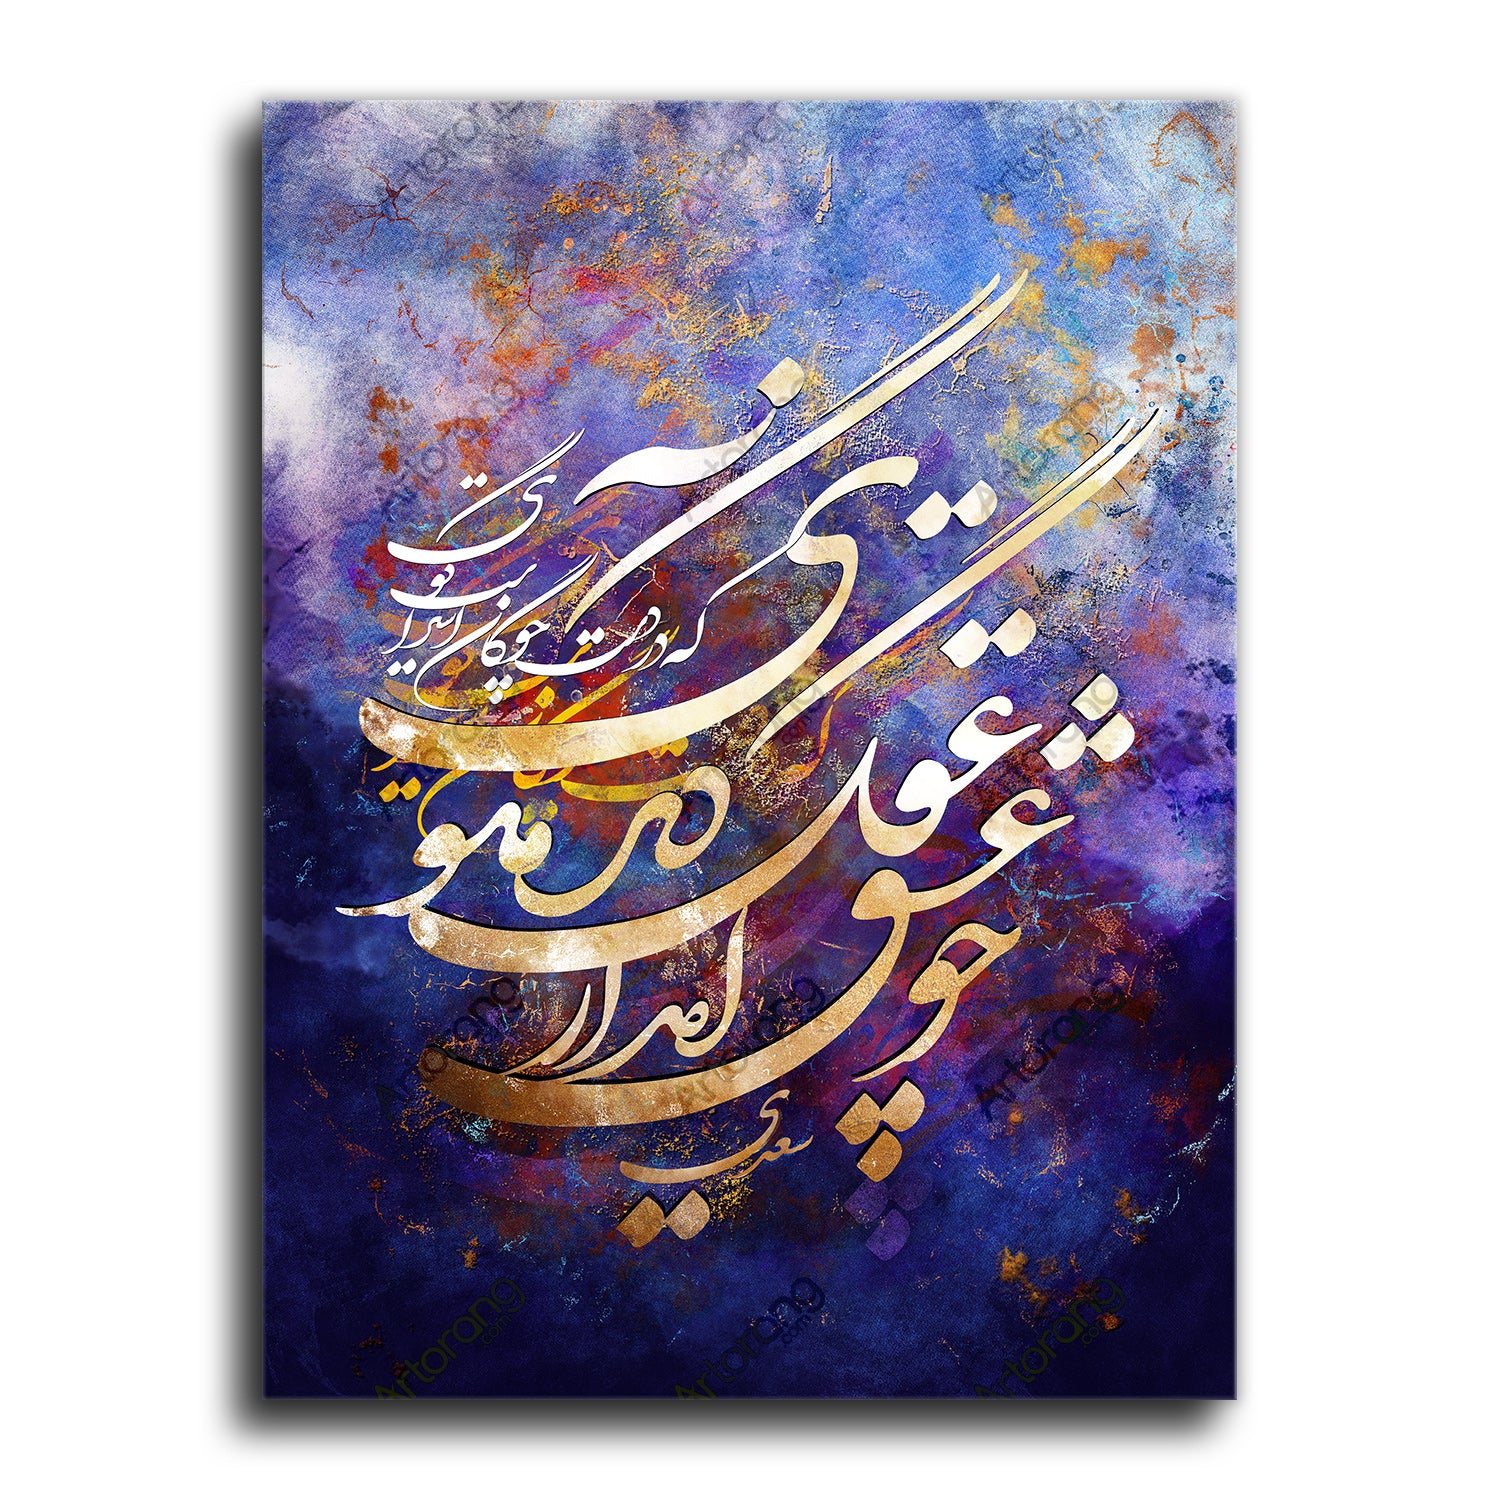 When Love Rises, Talk Not Of Wisdom, Saadi quote Persian calligraphy wall art - Artorang